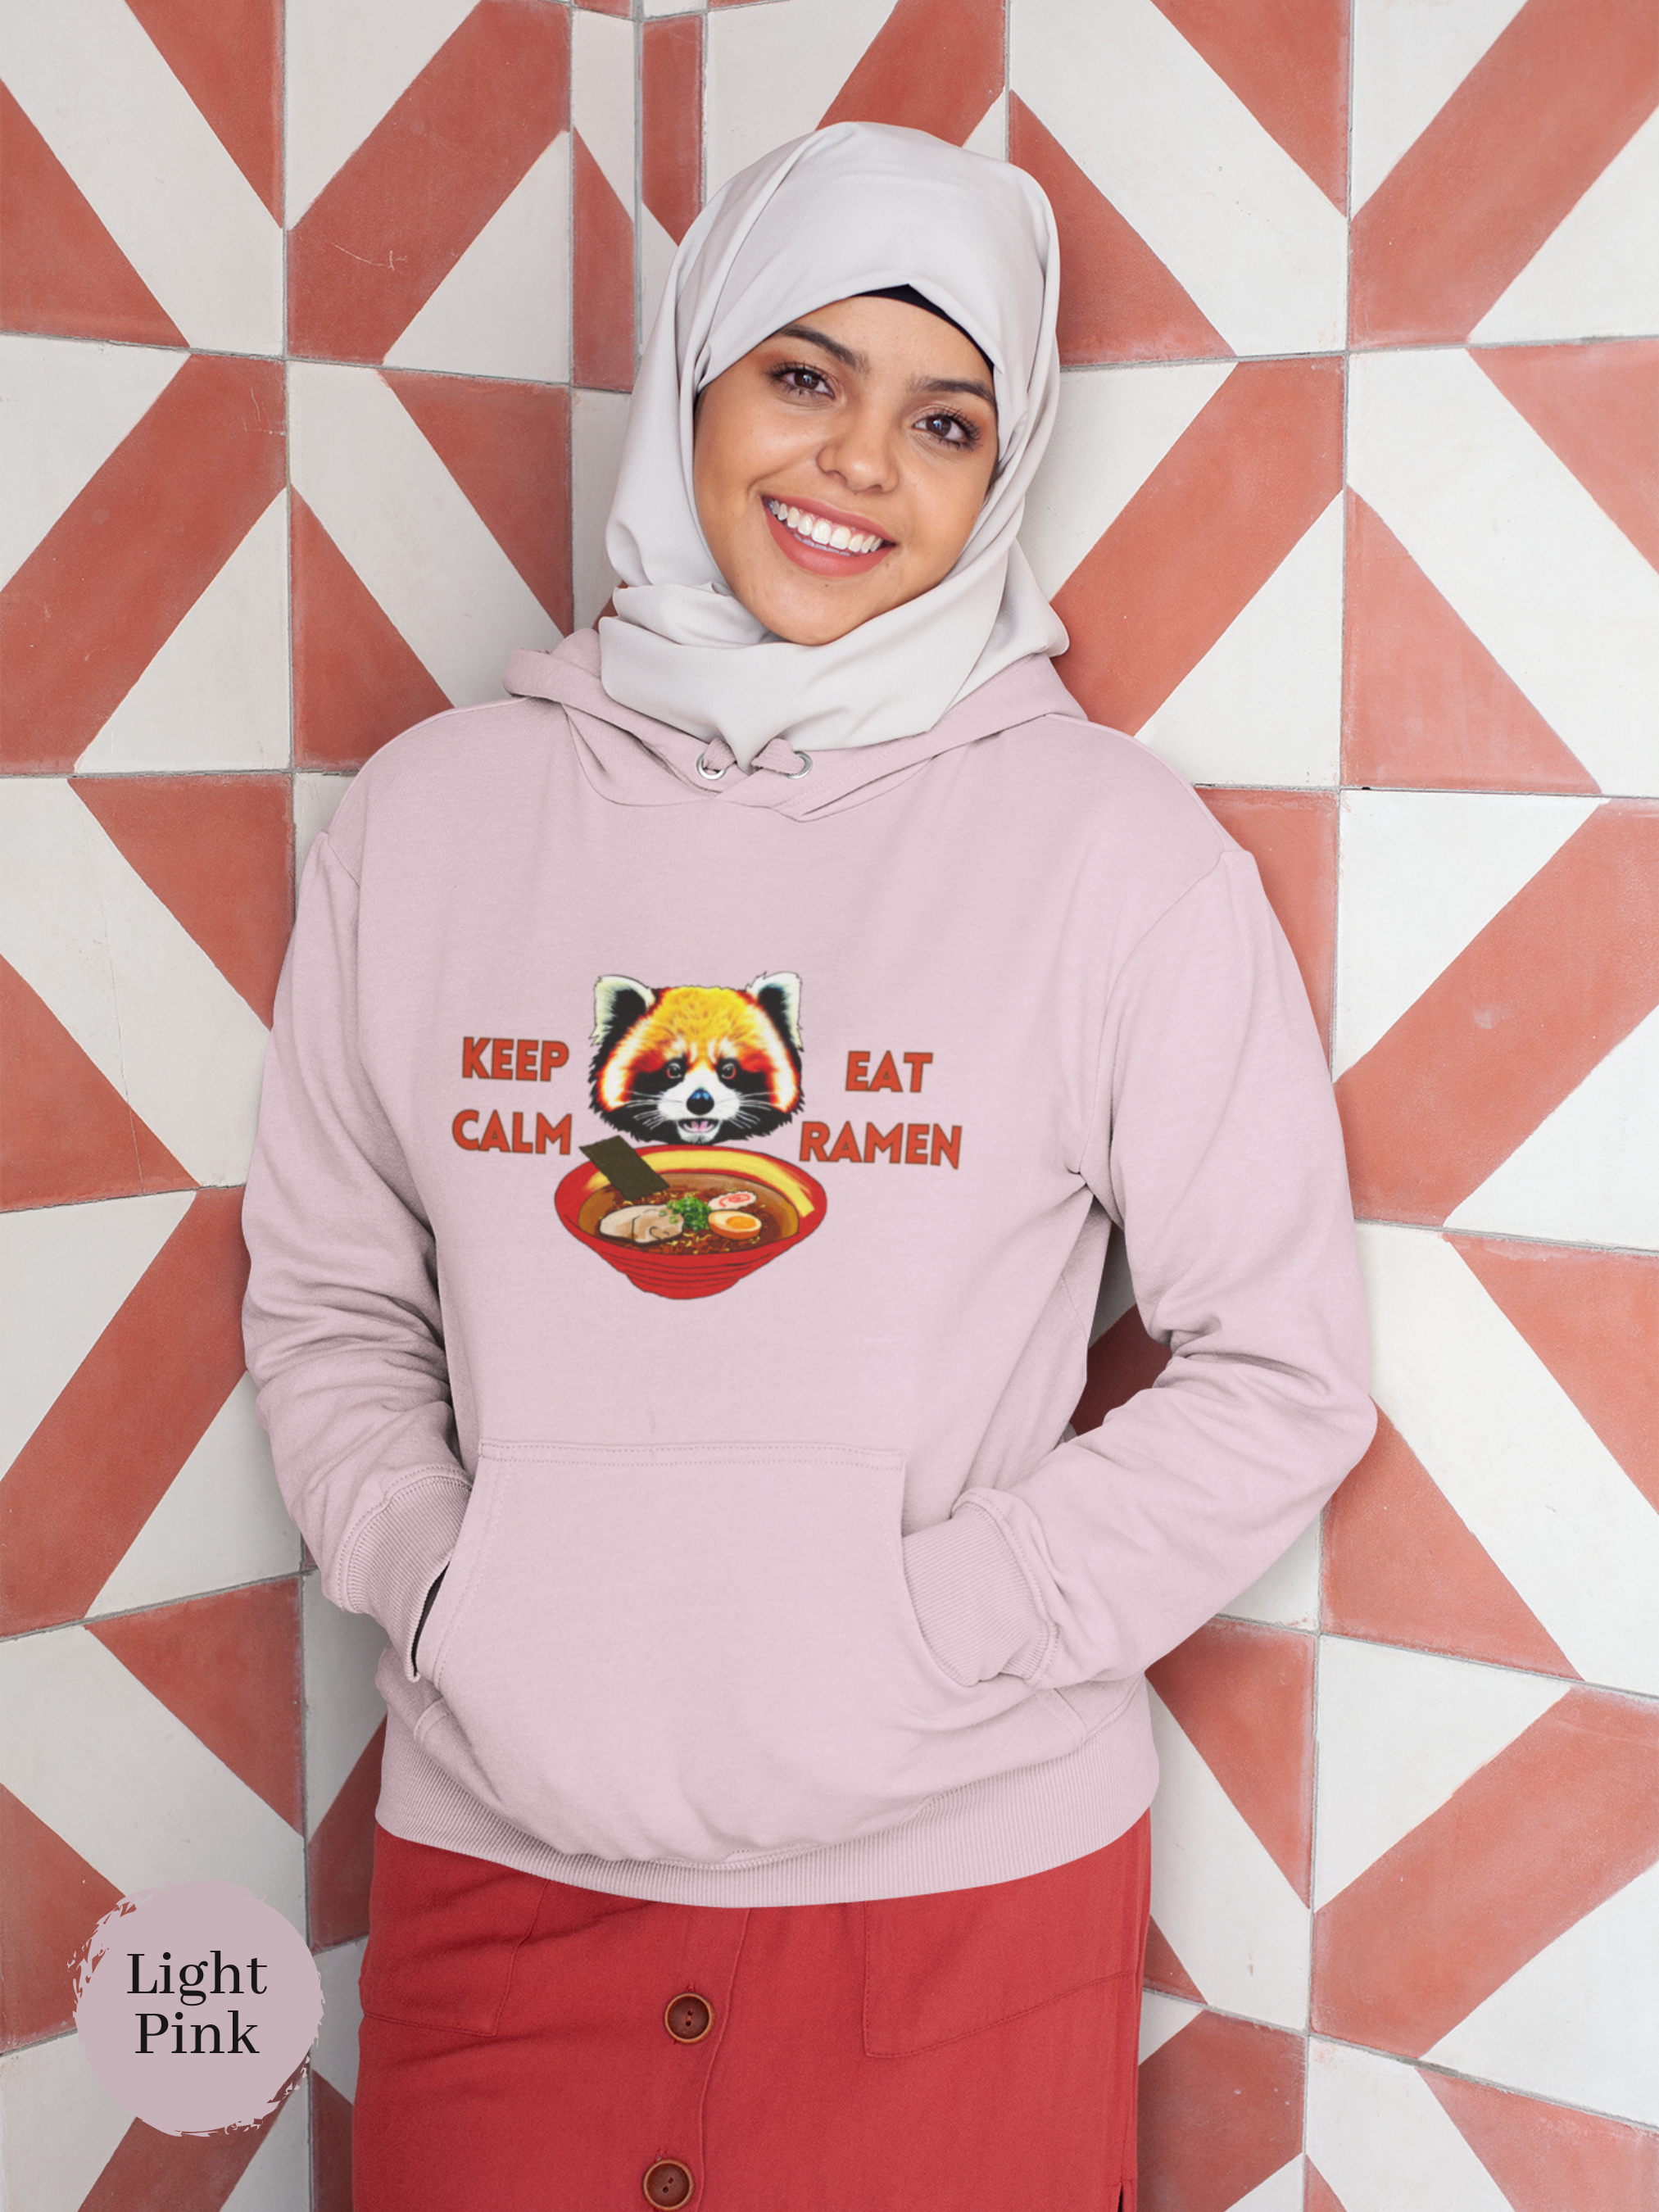 Ramen Hoodie: Keep Calm and Eat Ramen with Red Panda - Asian Foodie Sweatshirt for Ramen Lovers and Foodies